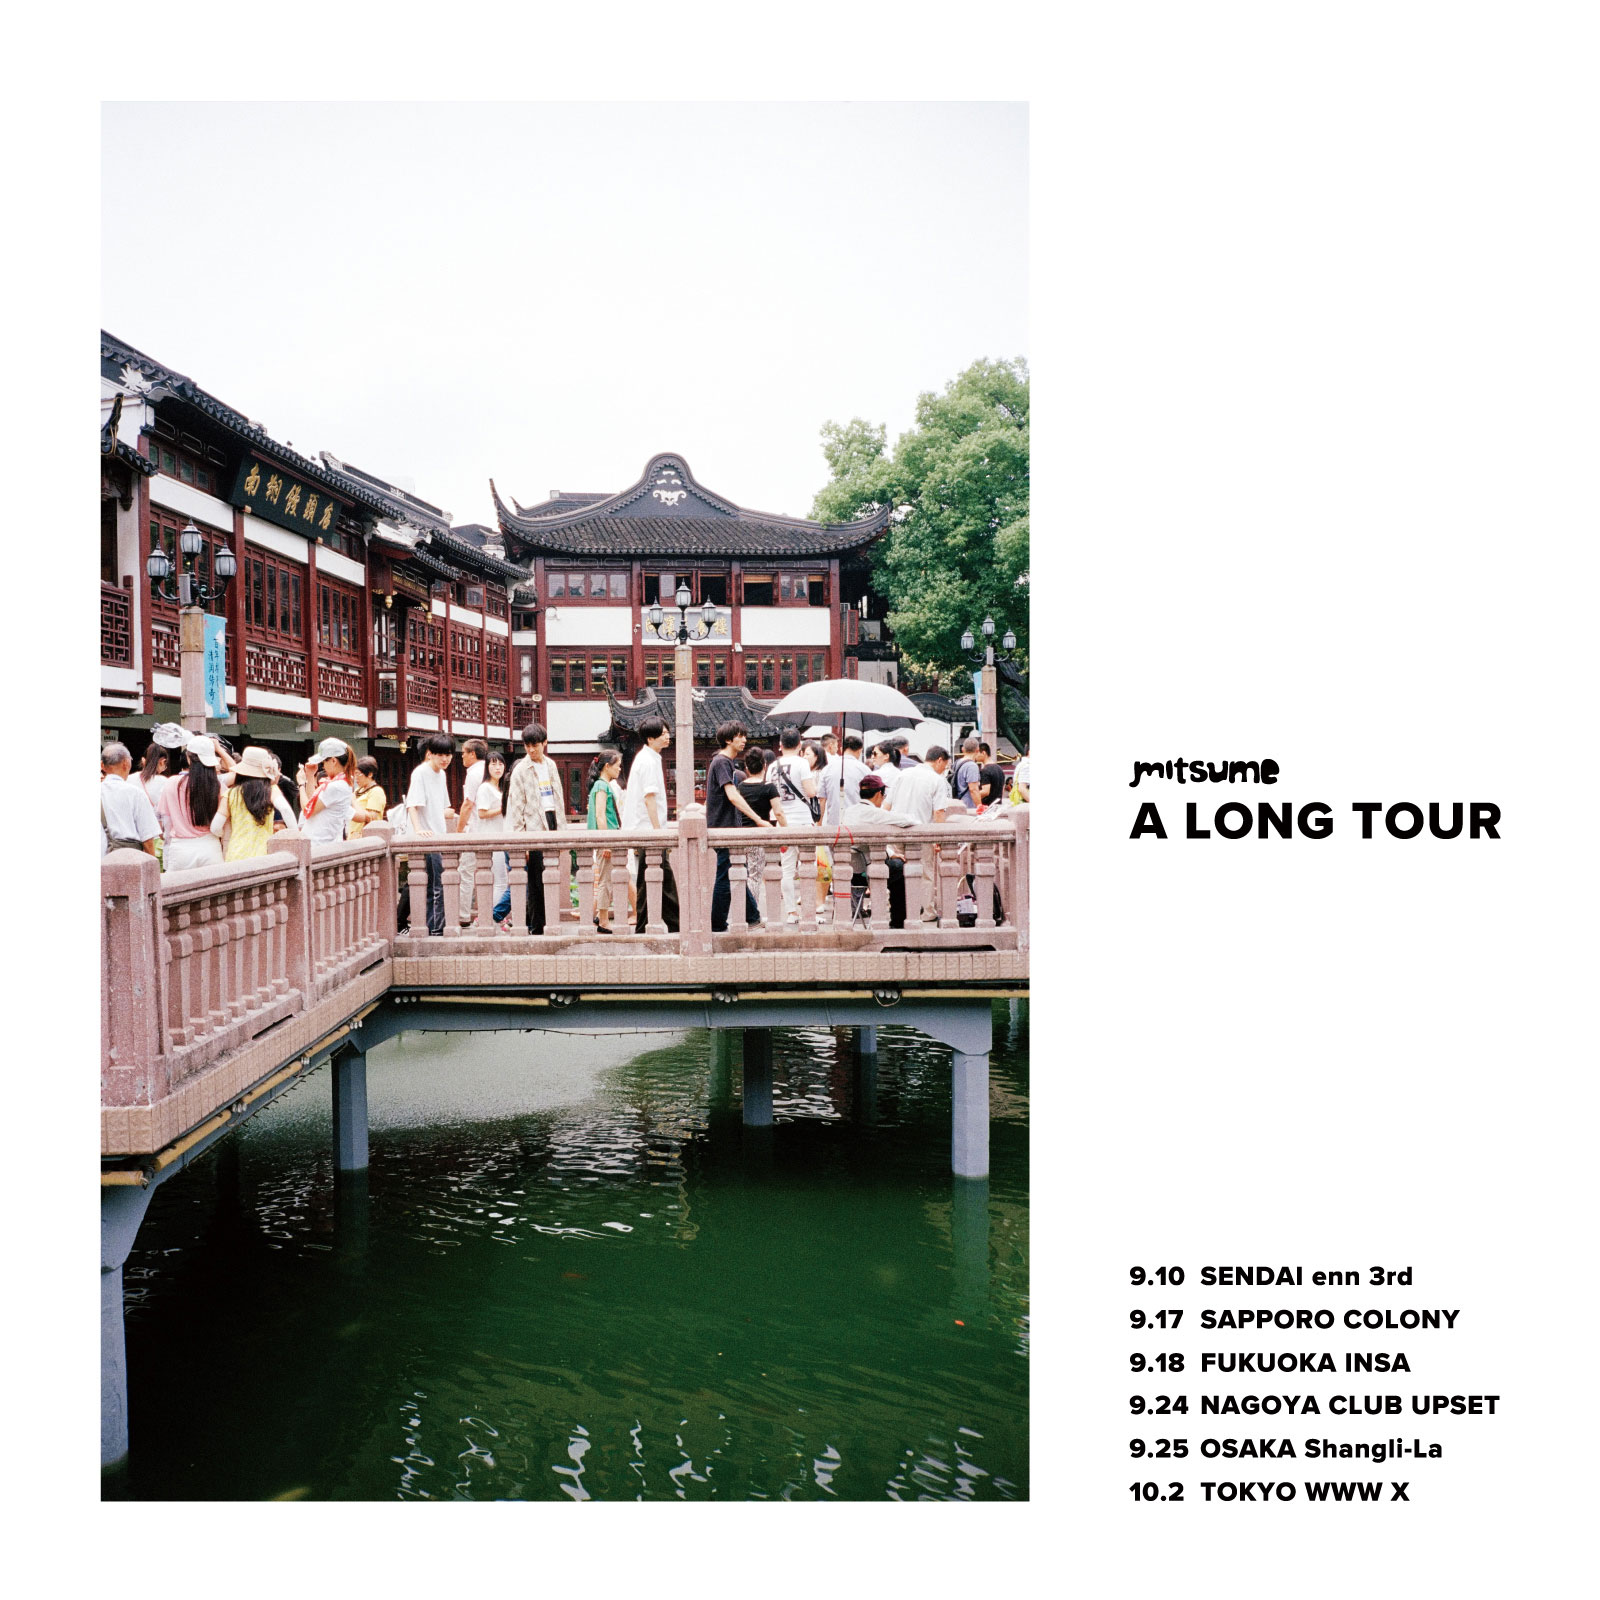 「A Long Tour」チケットが発売中です。